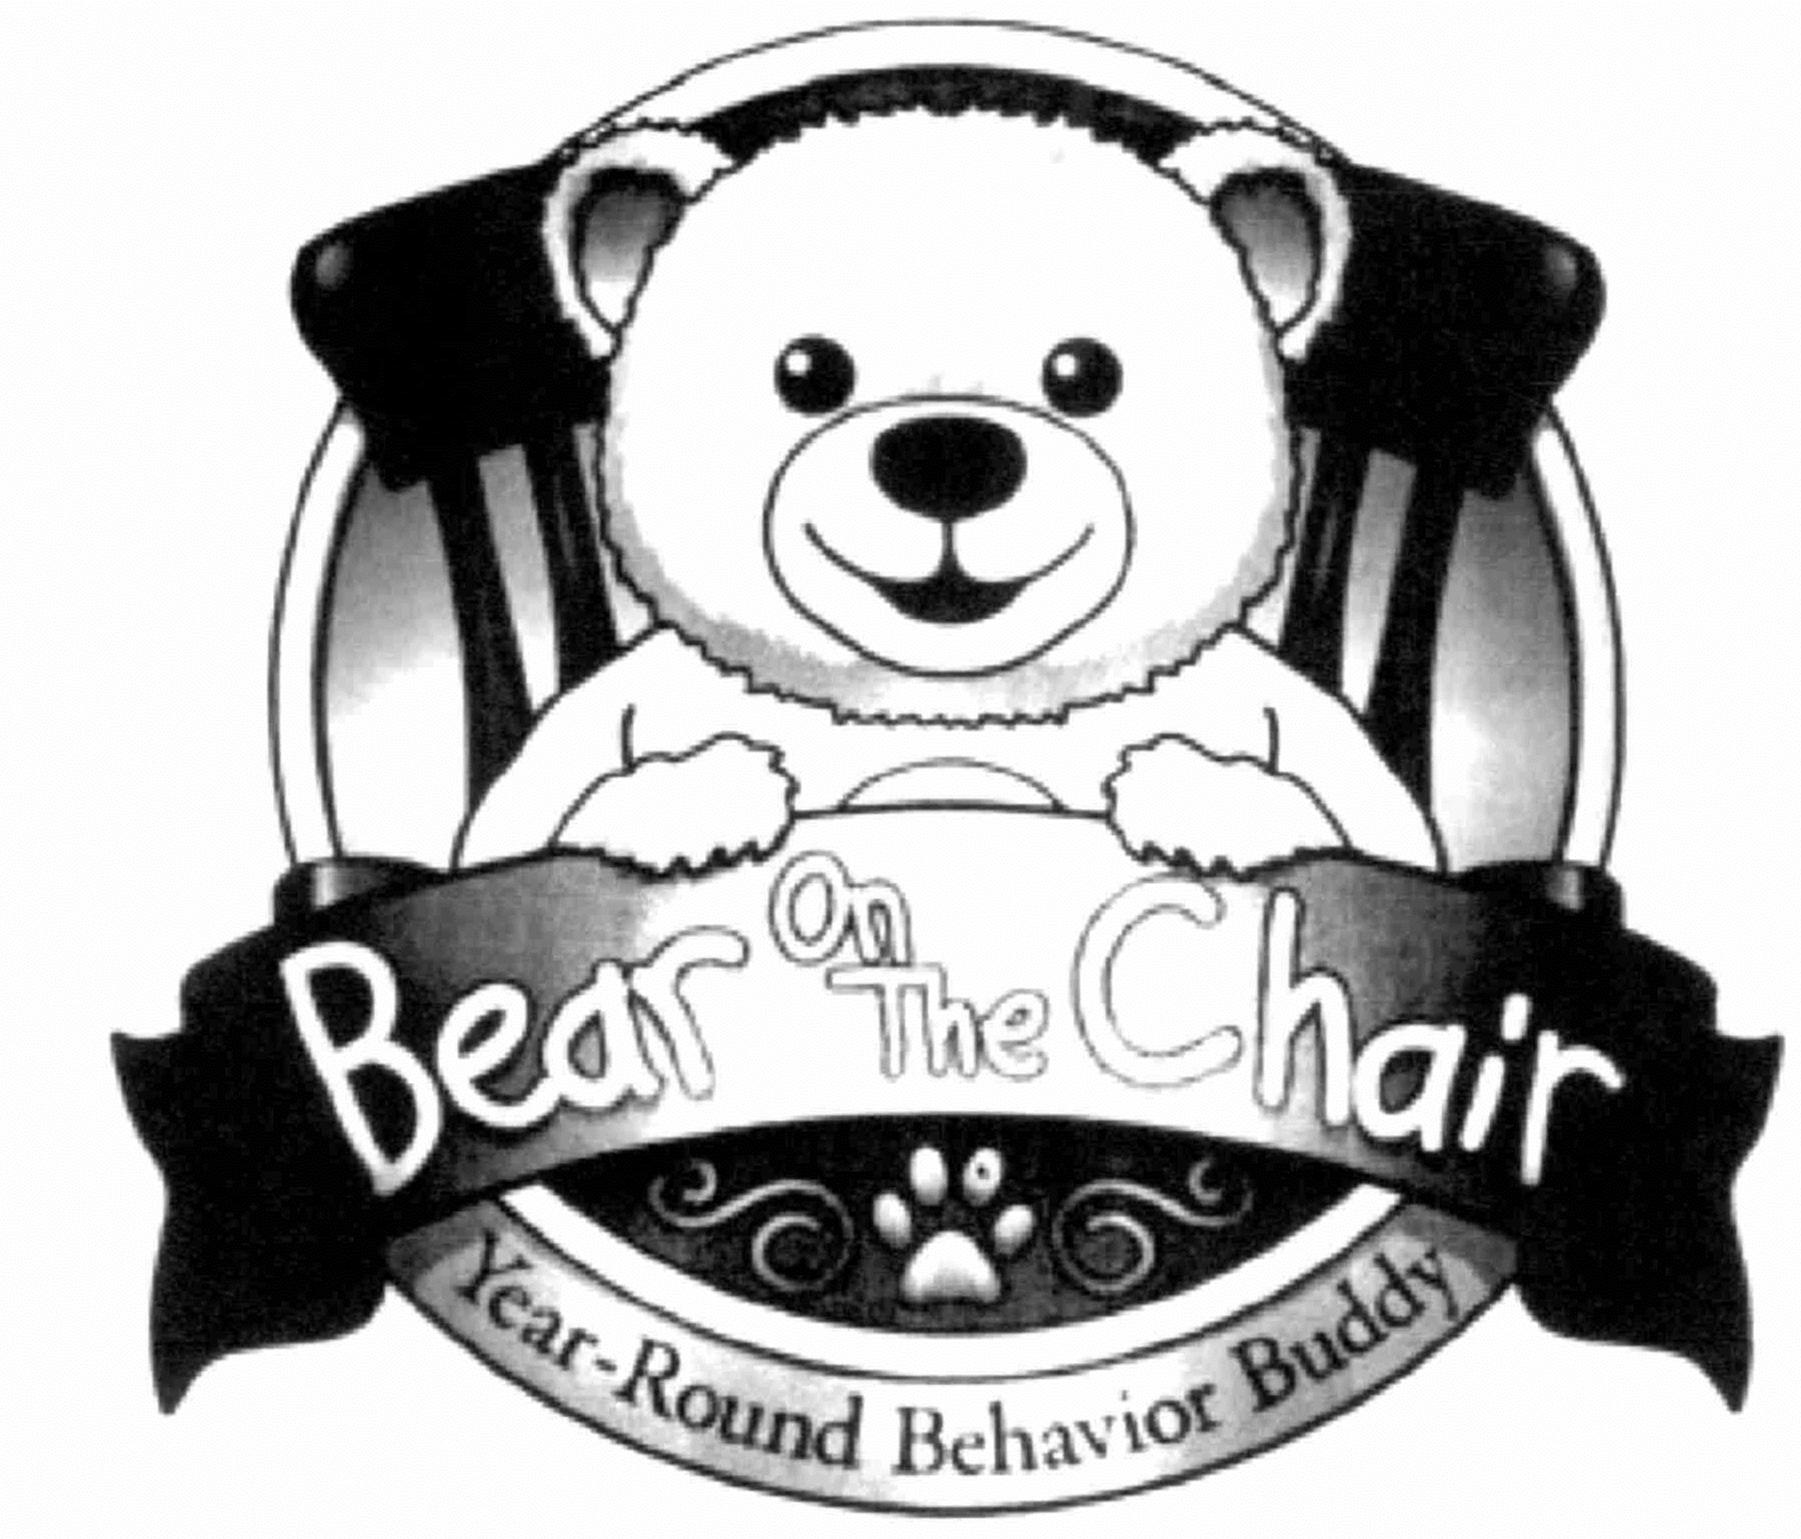  BEAR ON THE CHAIR YEAR-ROUND BEHAVIOR BUDDY